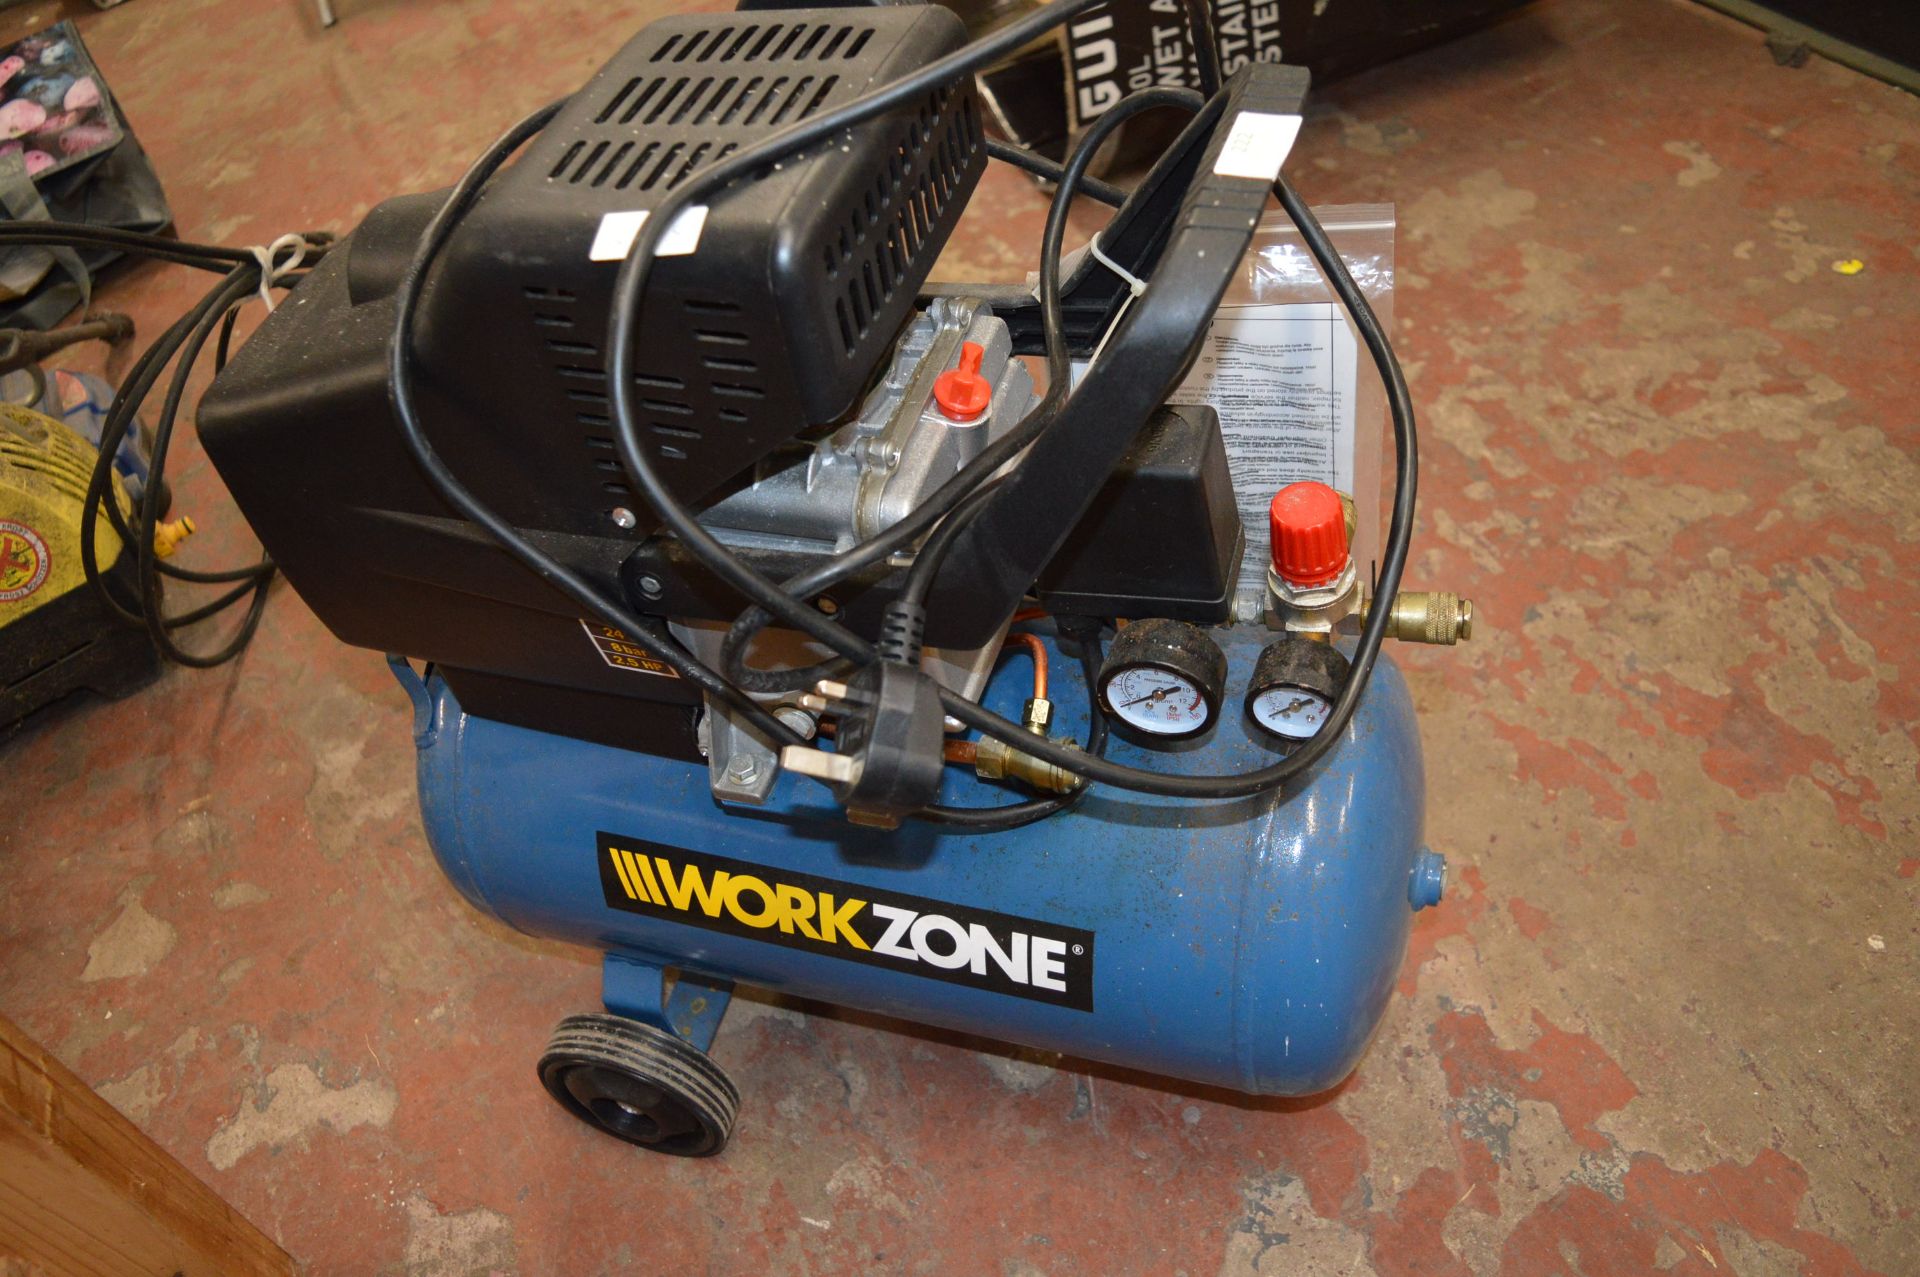 Work Zone Compressor - Image 2 of 2